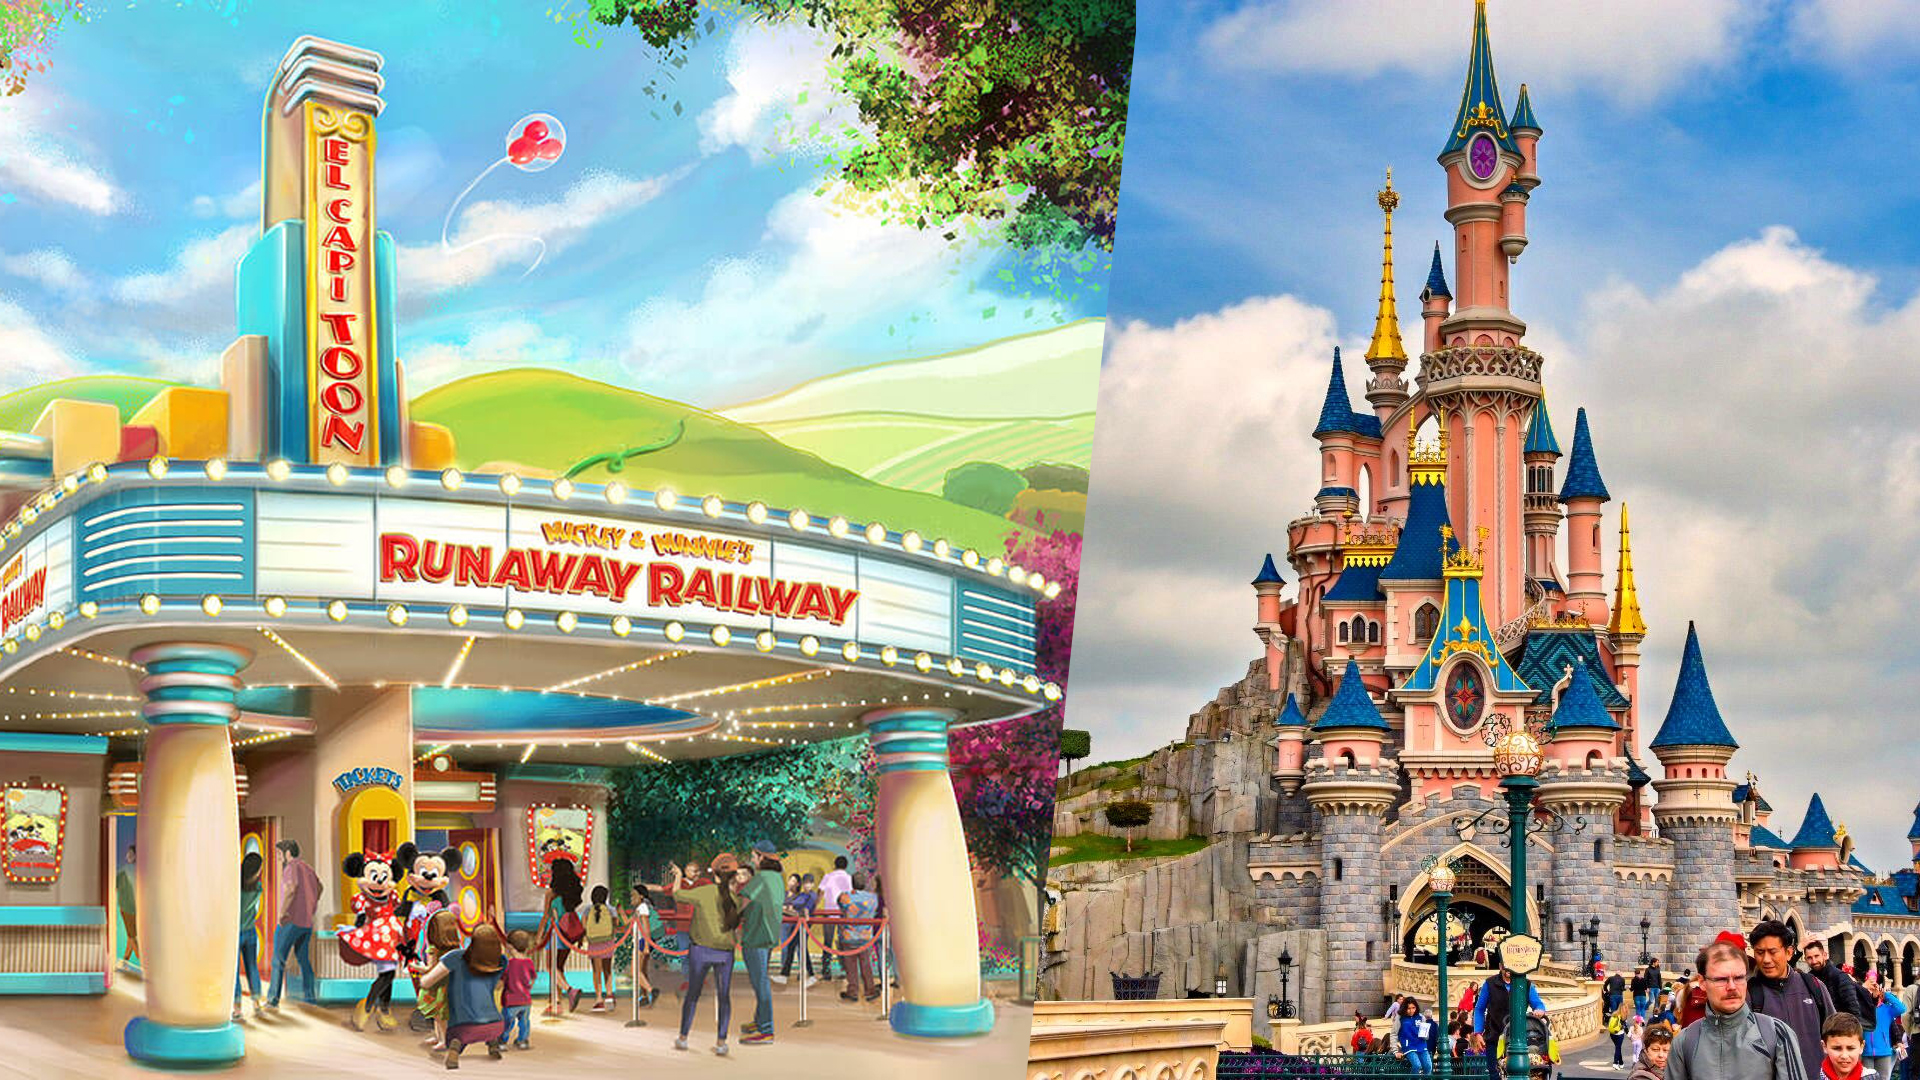 Why Disneyland Paris Deserves Mickey & Minnie’s Runaway Railway